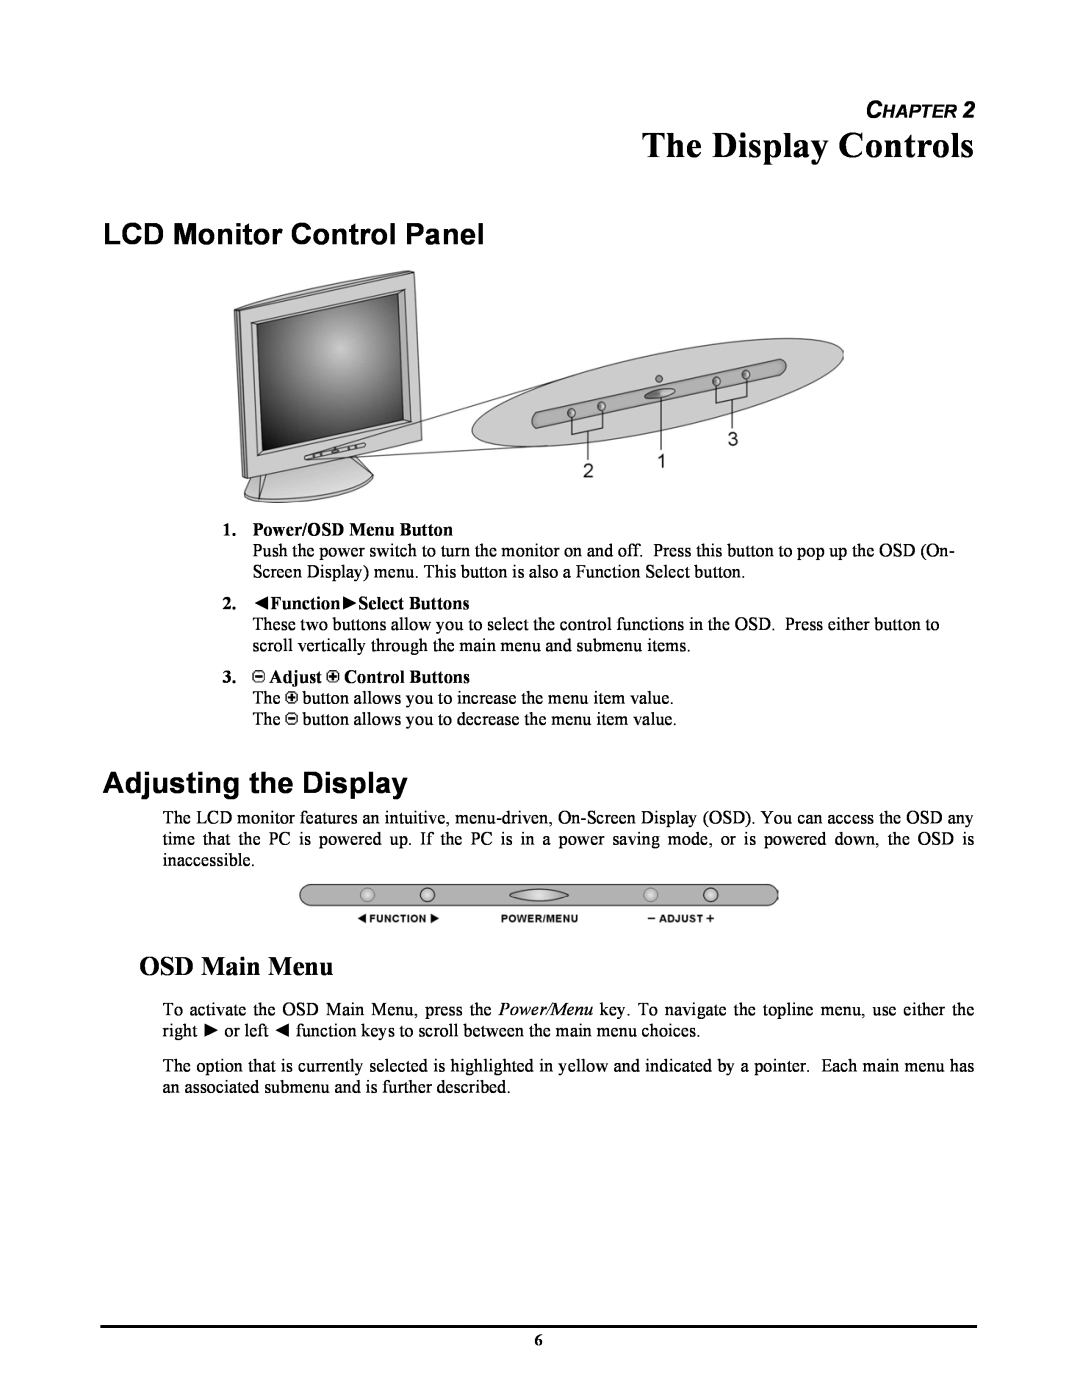 Planar FWT1744NU manual The Display Controls, LCD Monitor Control Panel, Adjusting the Display, OSD Main Menu, Chapter 